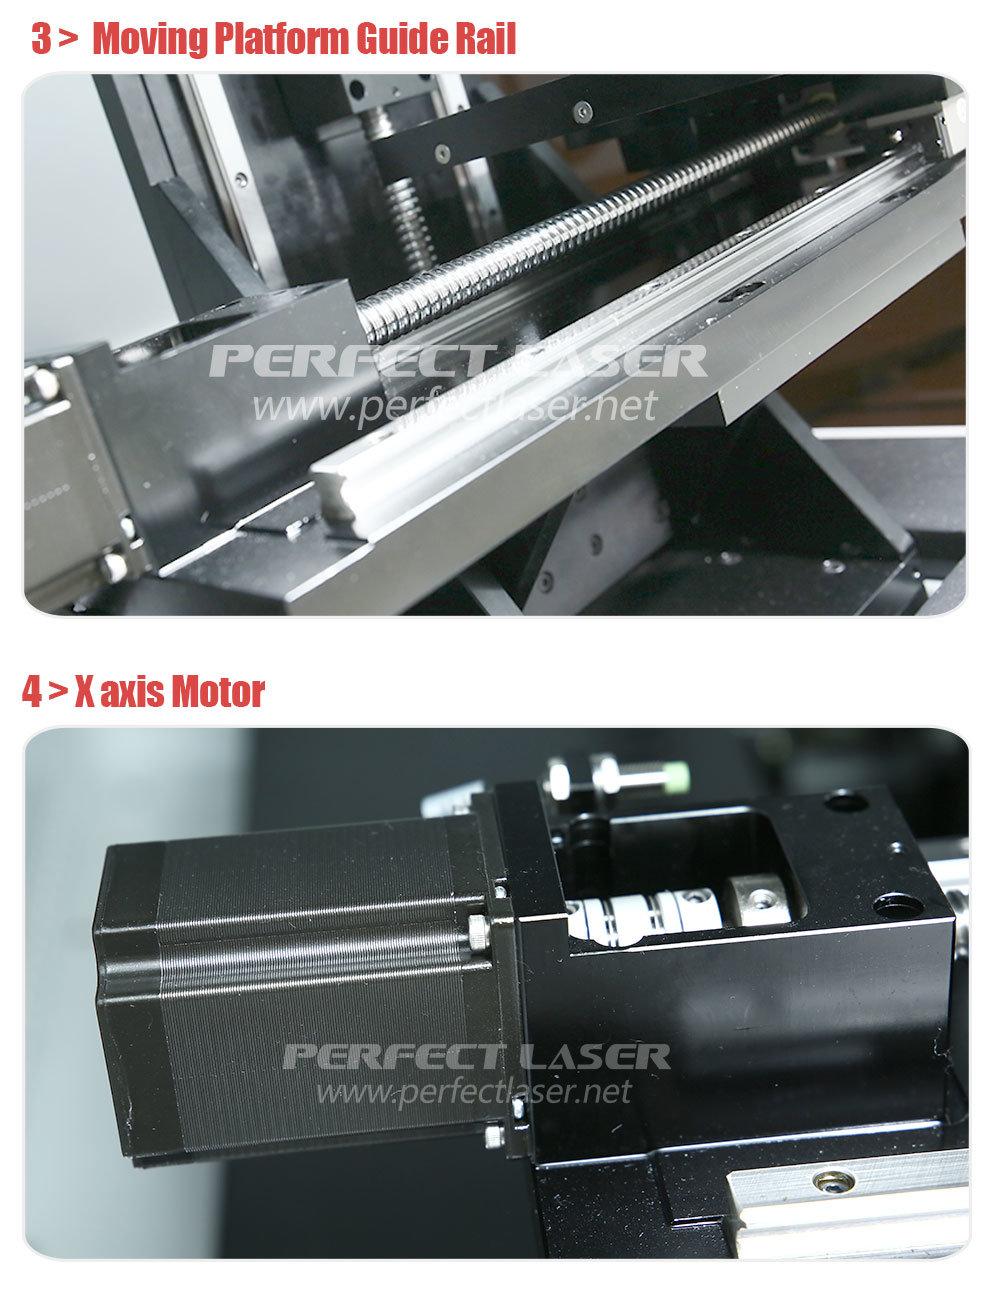 3D Crystal Sub Surface Engraving Large Size Laser Printer Machine